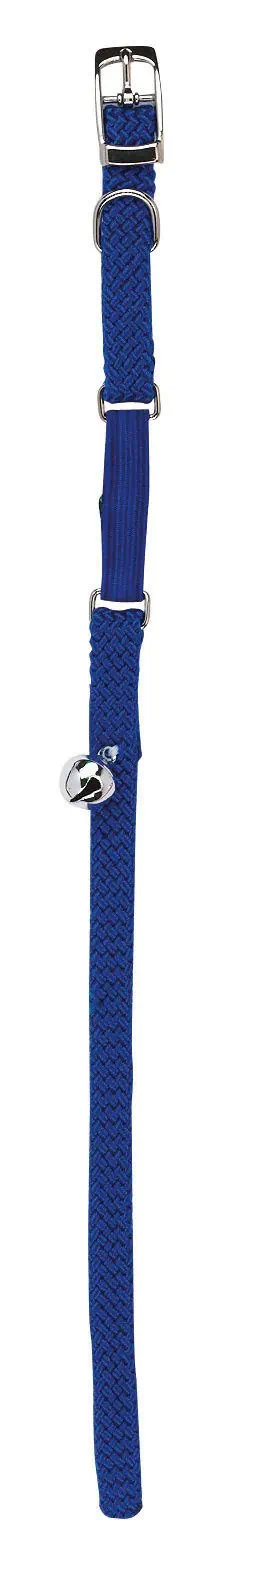 Katzenhalsband mit Gummizug blau 10 mm x 30 cm